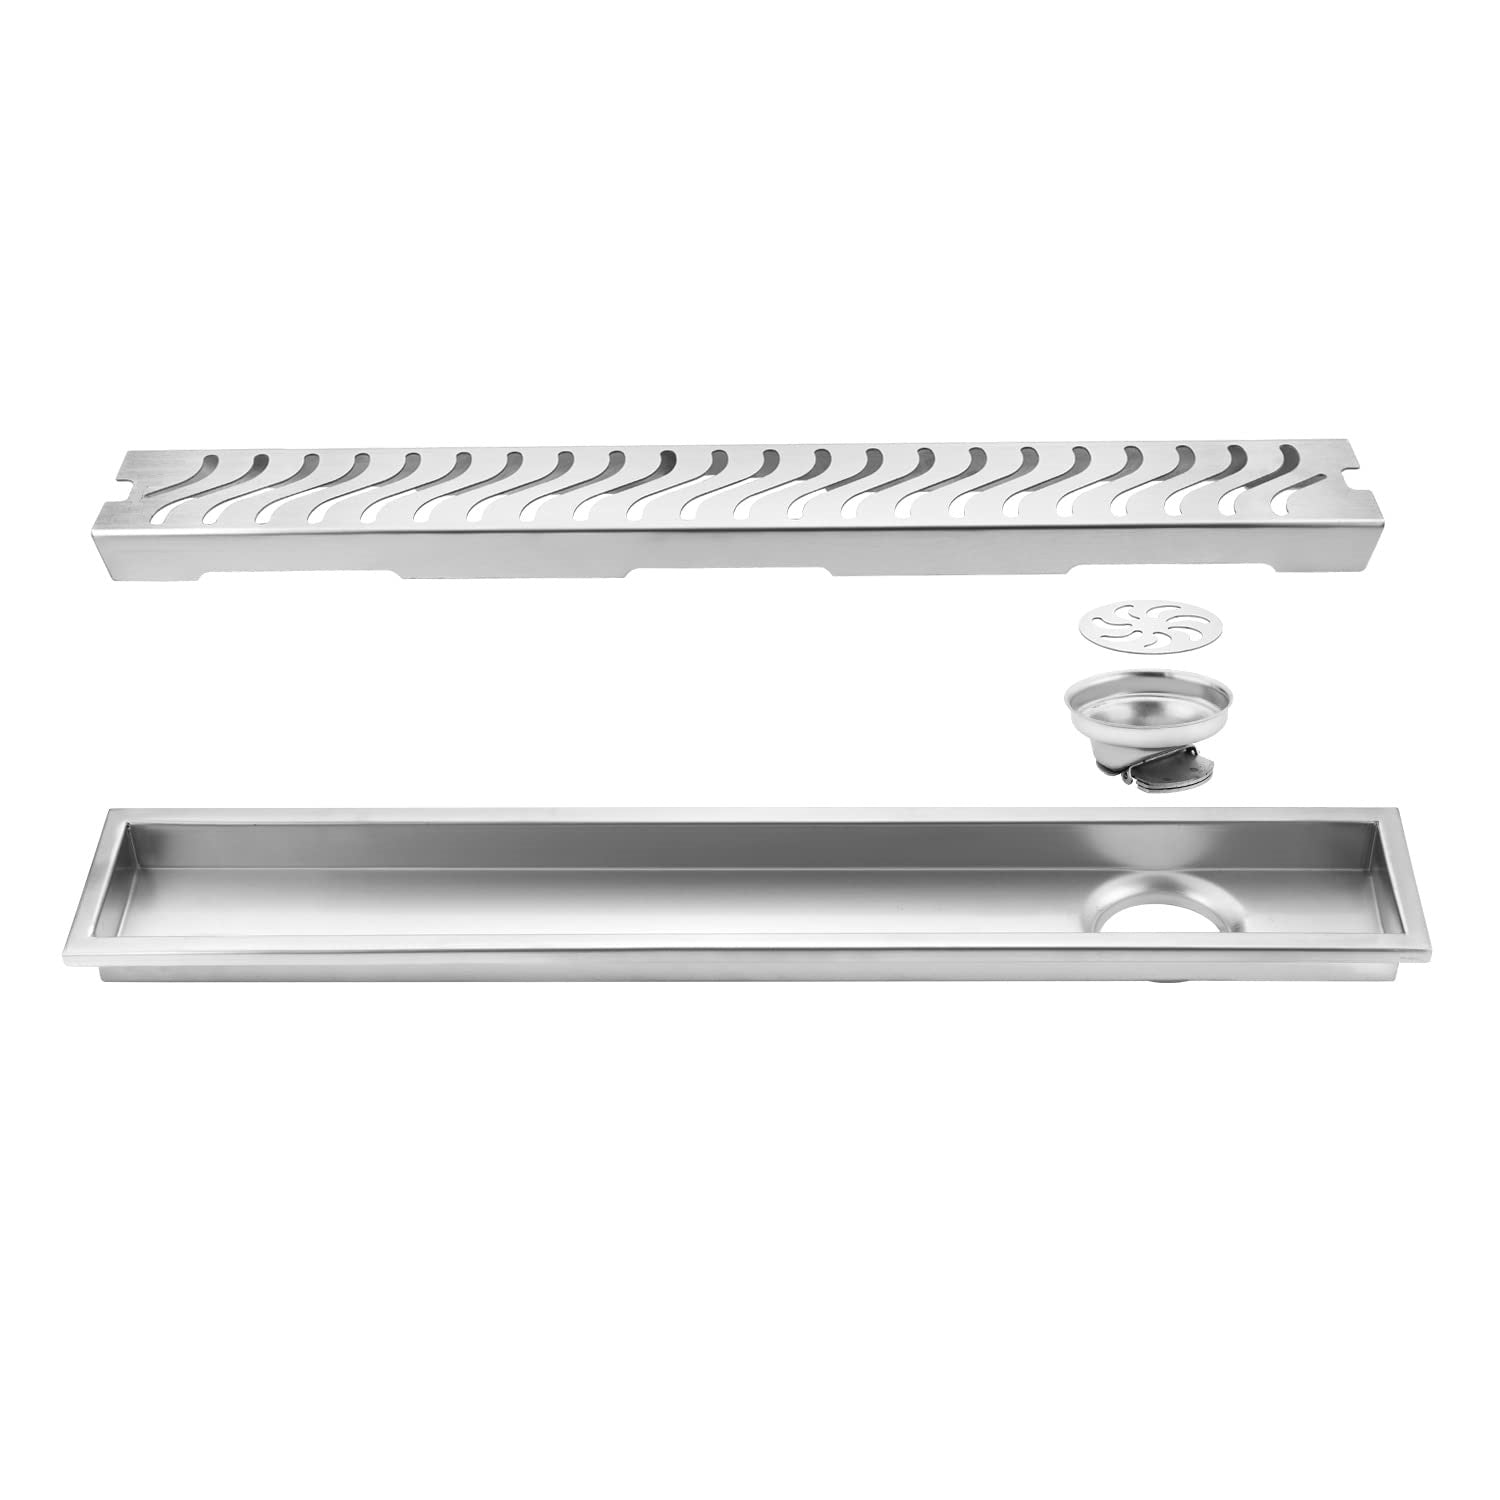 Wave Bathroom Floor Water Drainer/Shower Water Drainer Channel with Collar |Stainless Steel 304 Grade - Marcoware